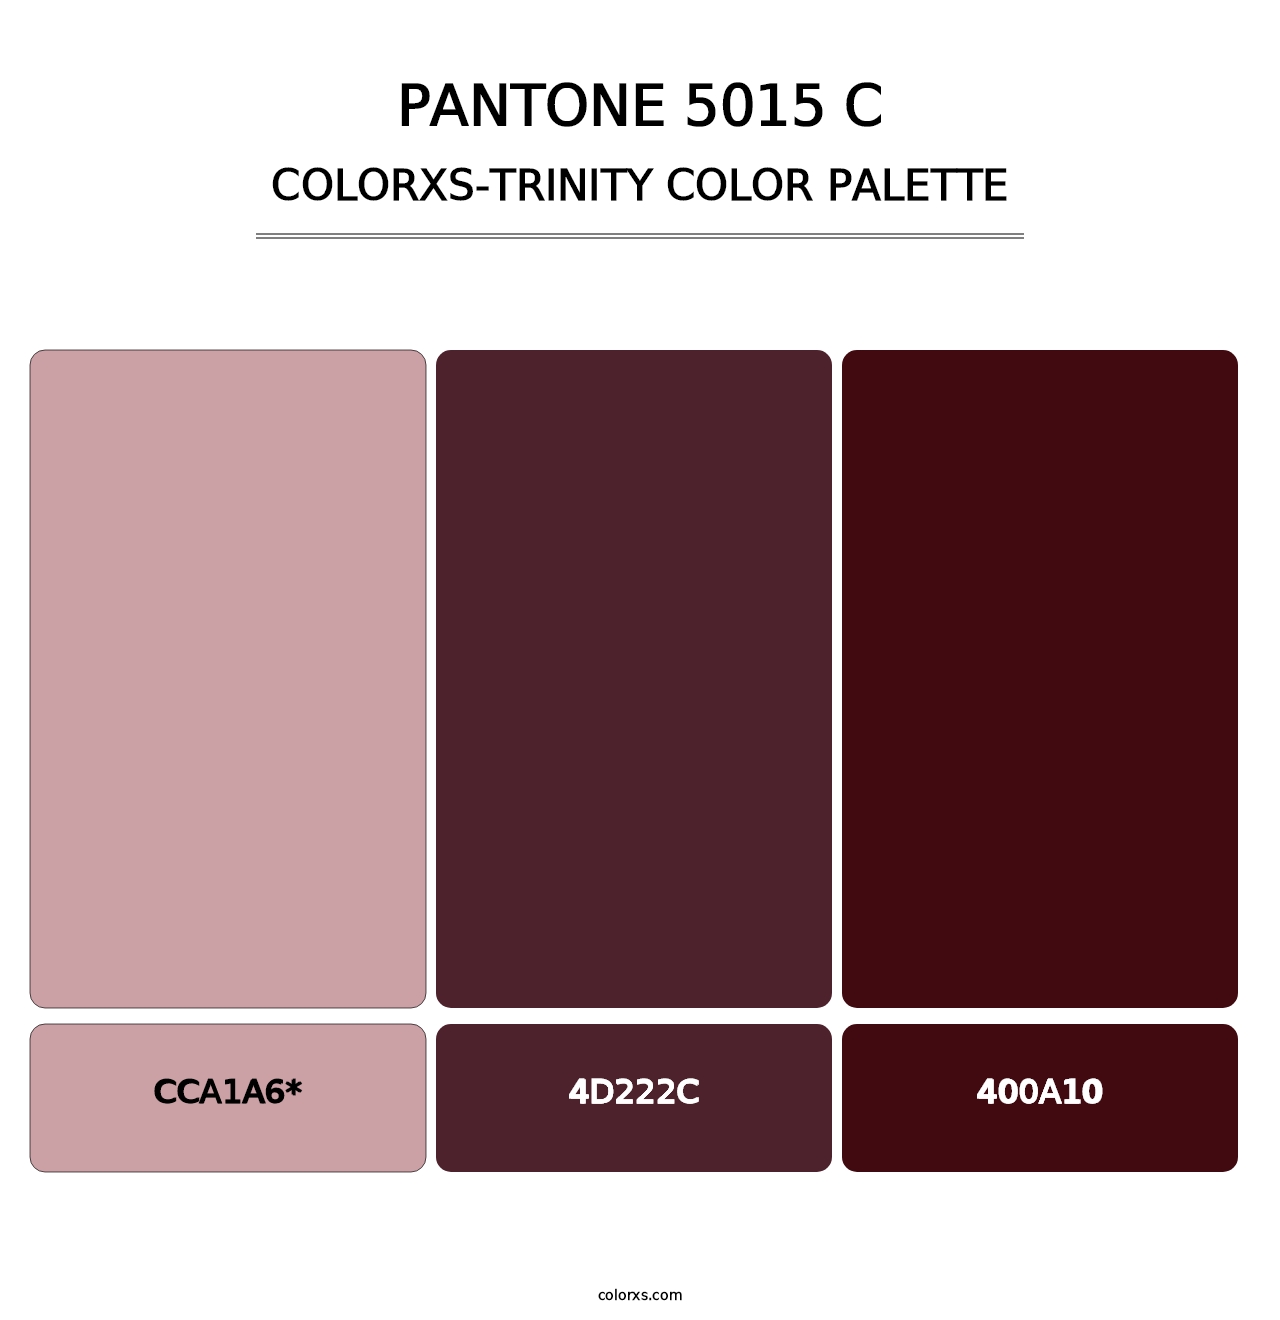 PANTONE 5015 C - Colorxs Trinity Palette